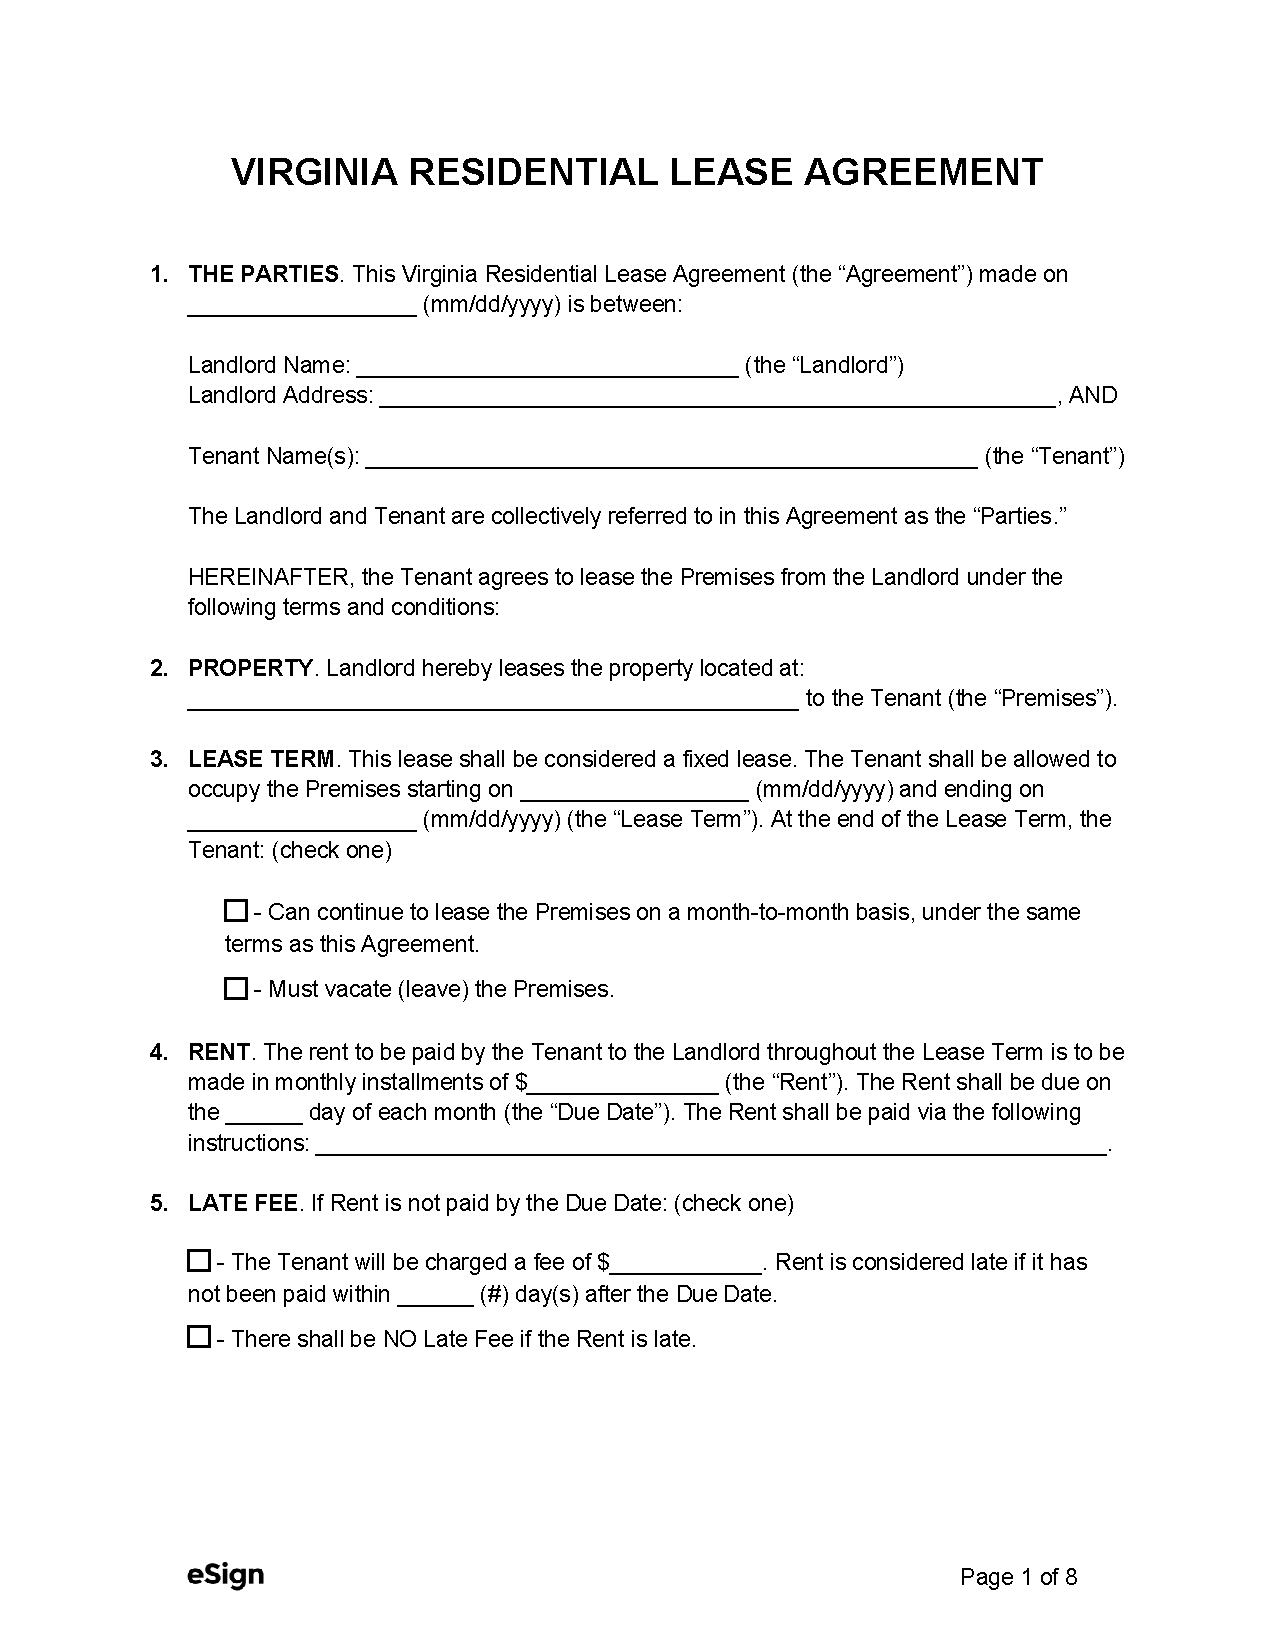 Virginia Standard Residential Lease Agreement Printable Form